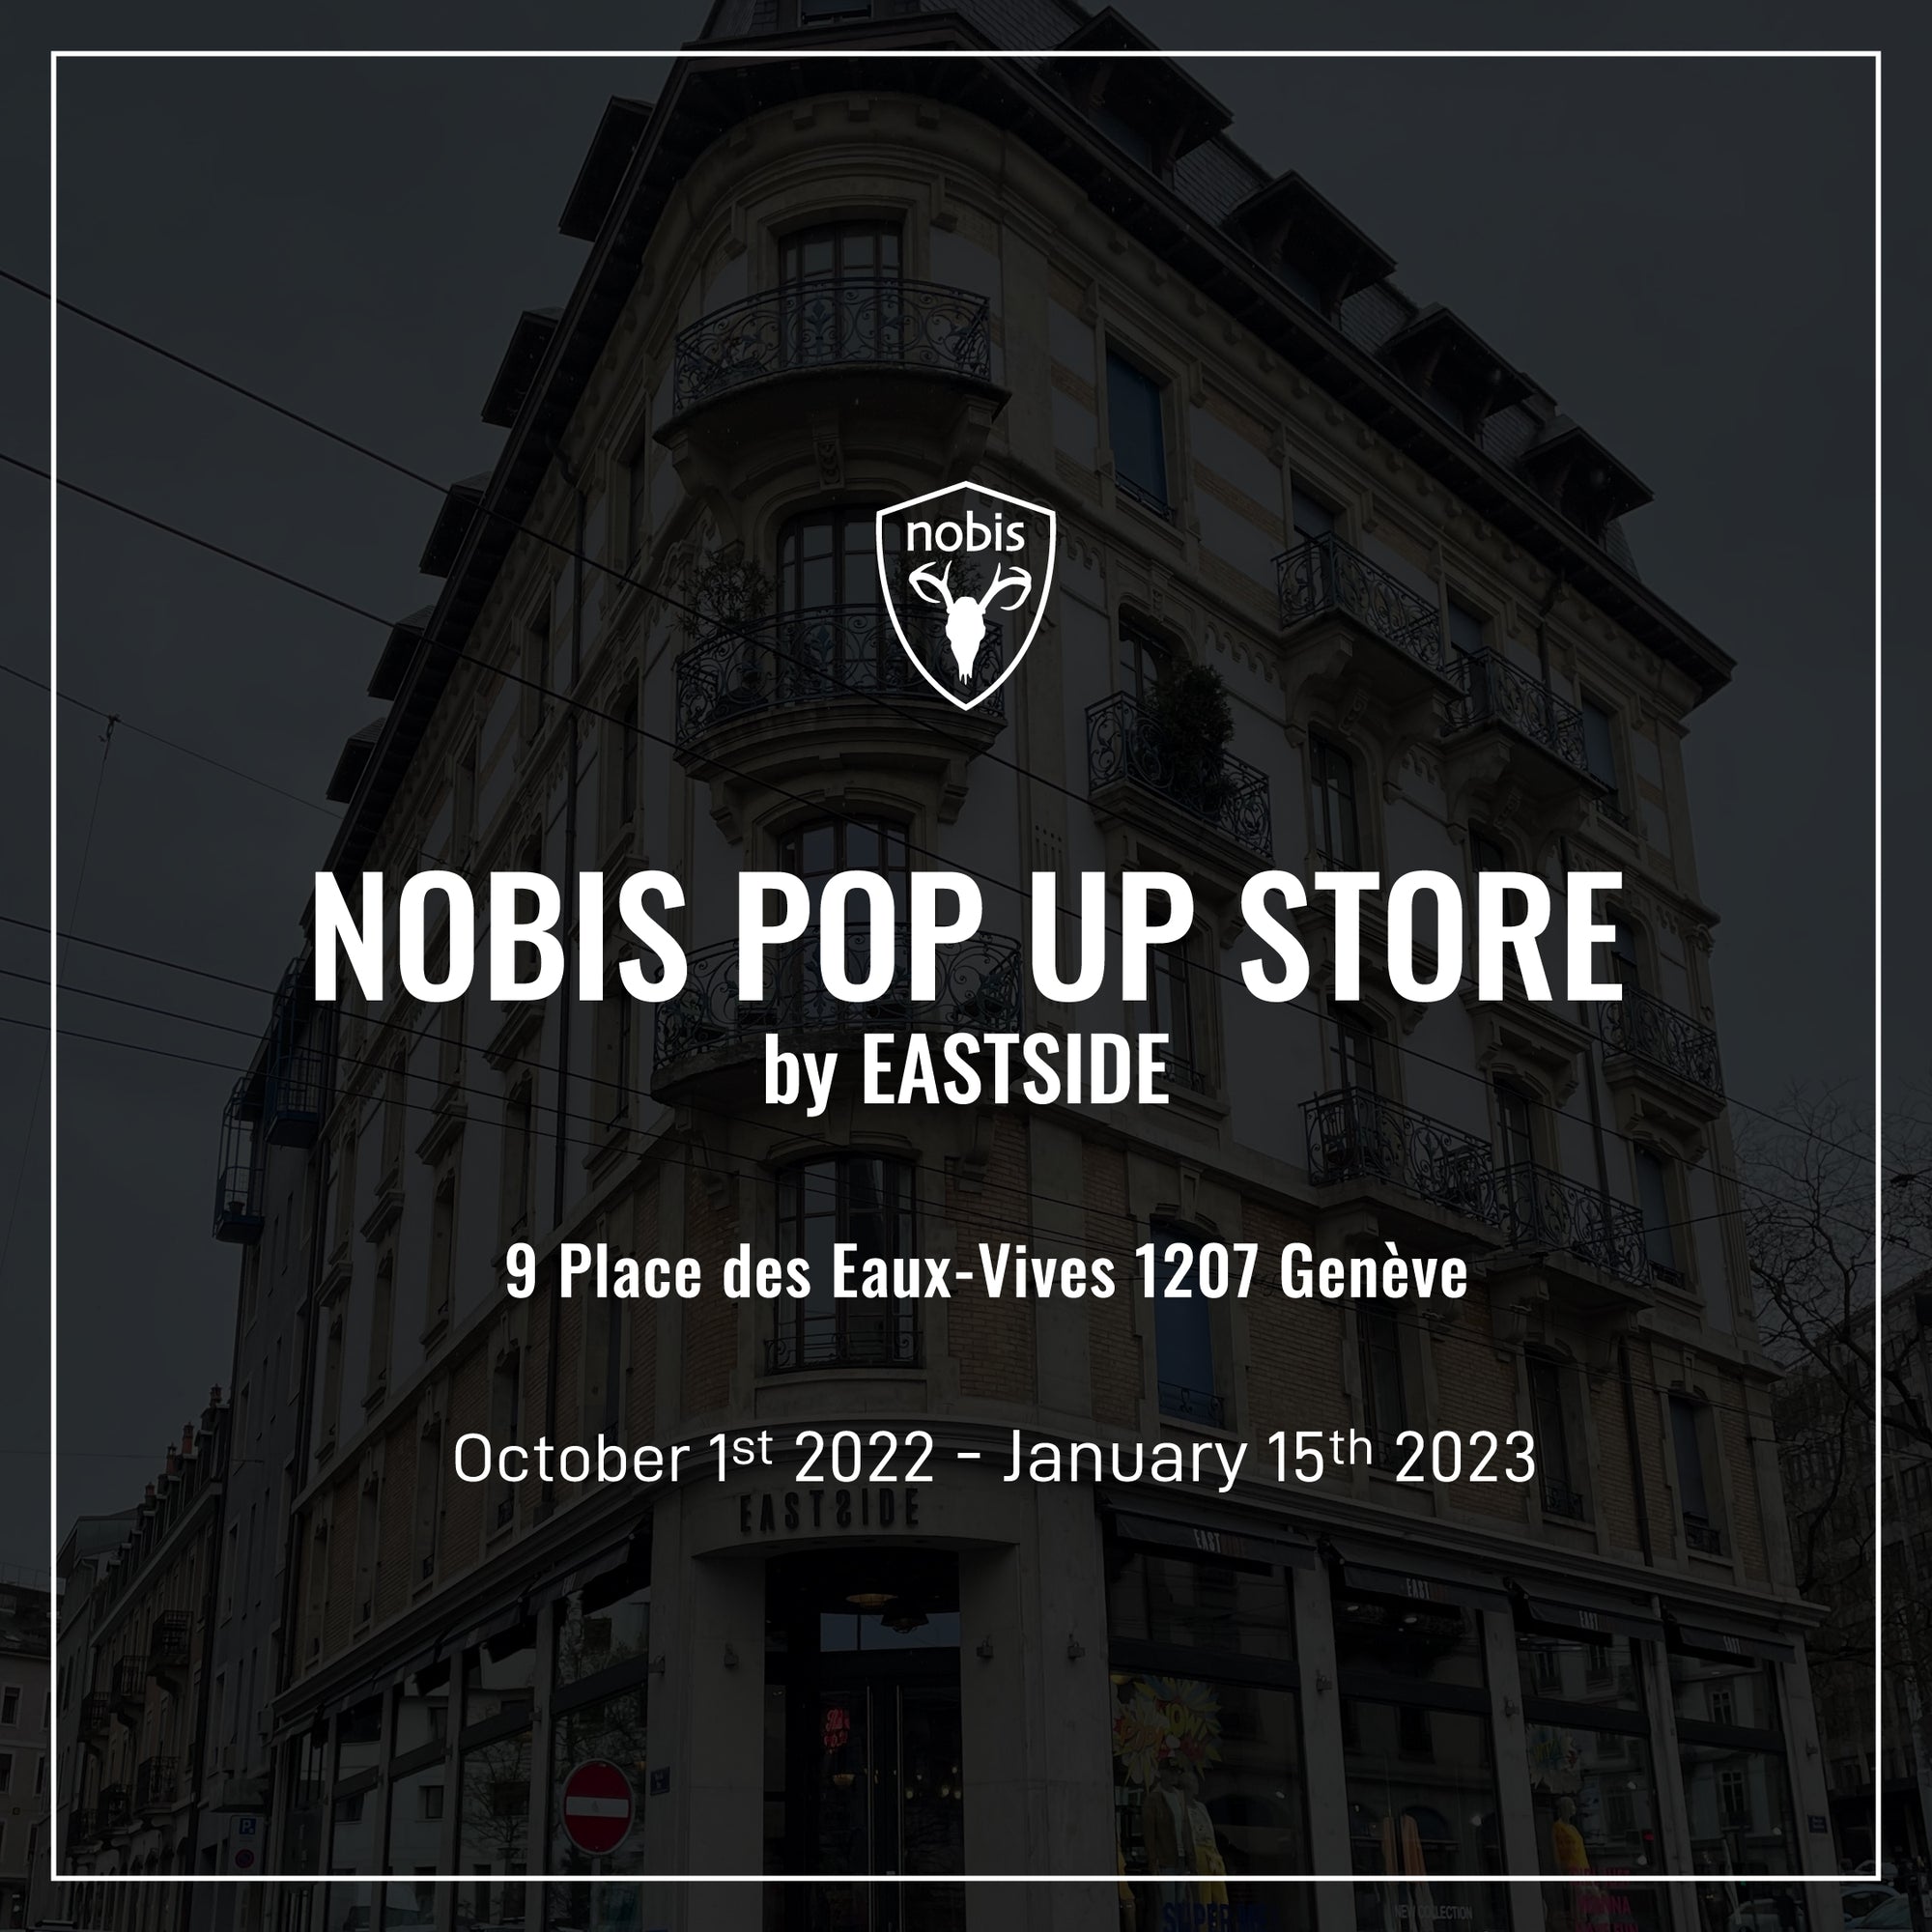 NOBIS, the Rolls-Royce of Canadian parkas opens its POP-UP STORE @ EASTSIDE in Geneva on October 1st.